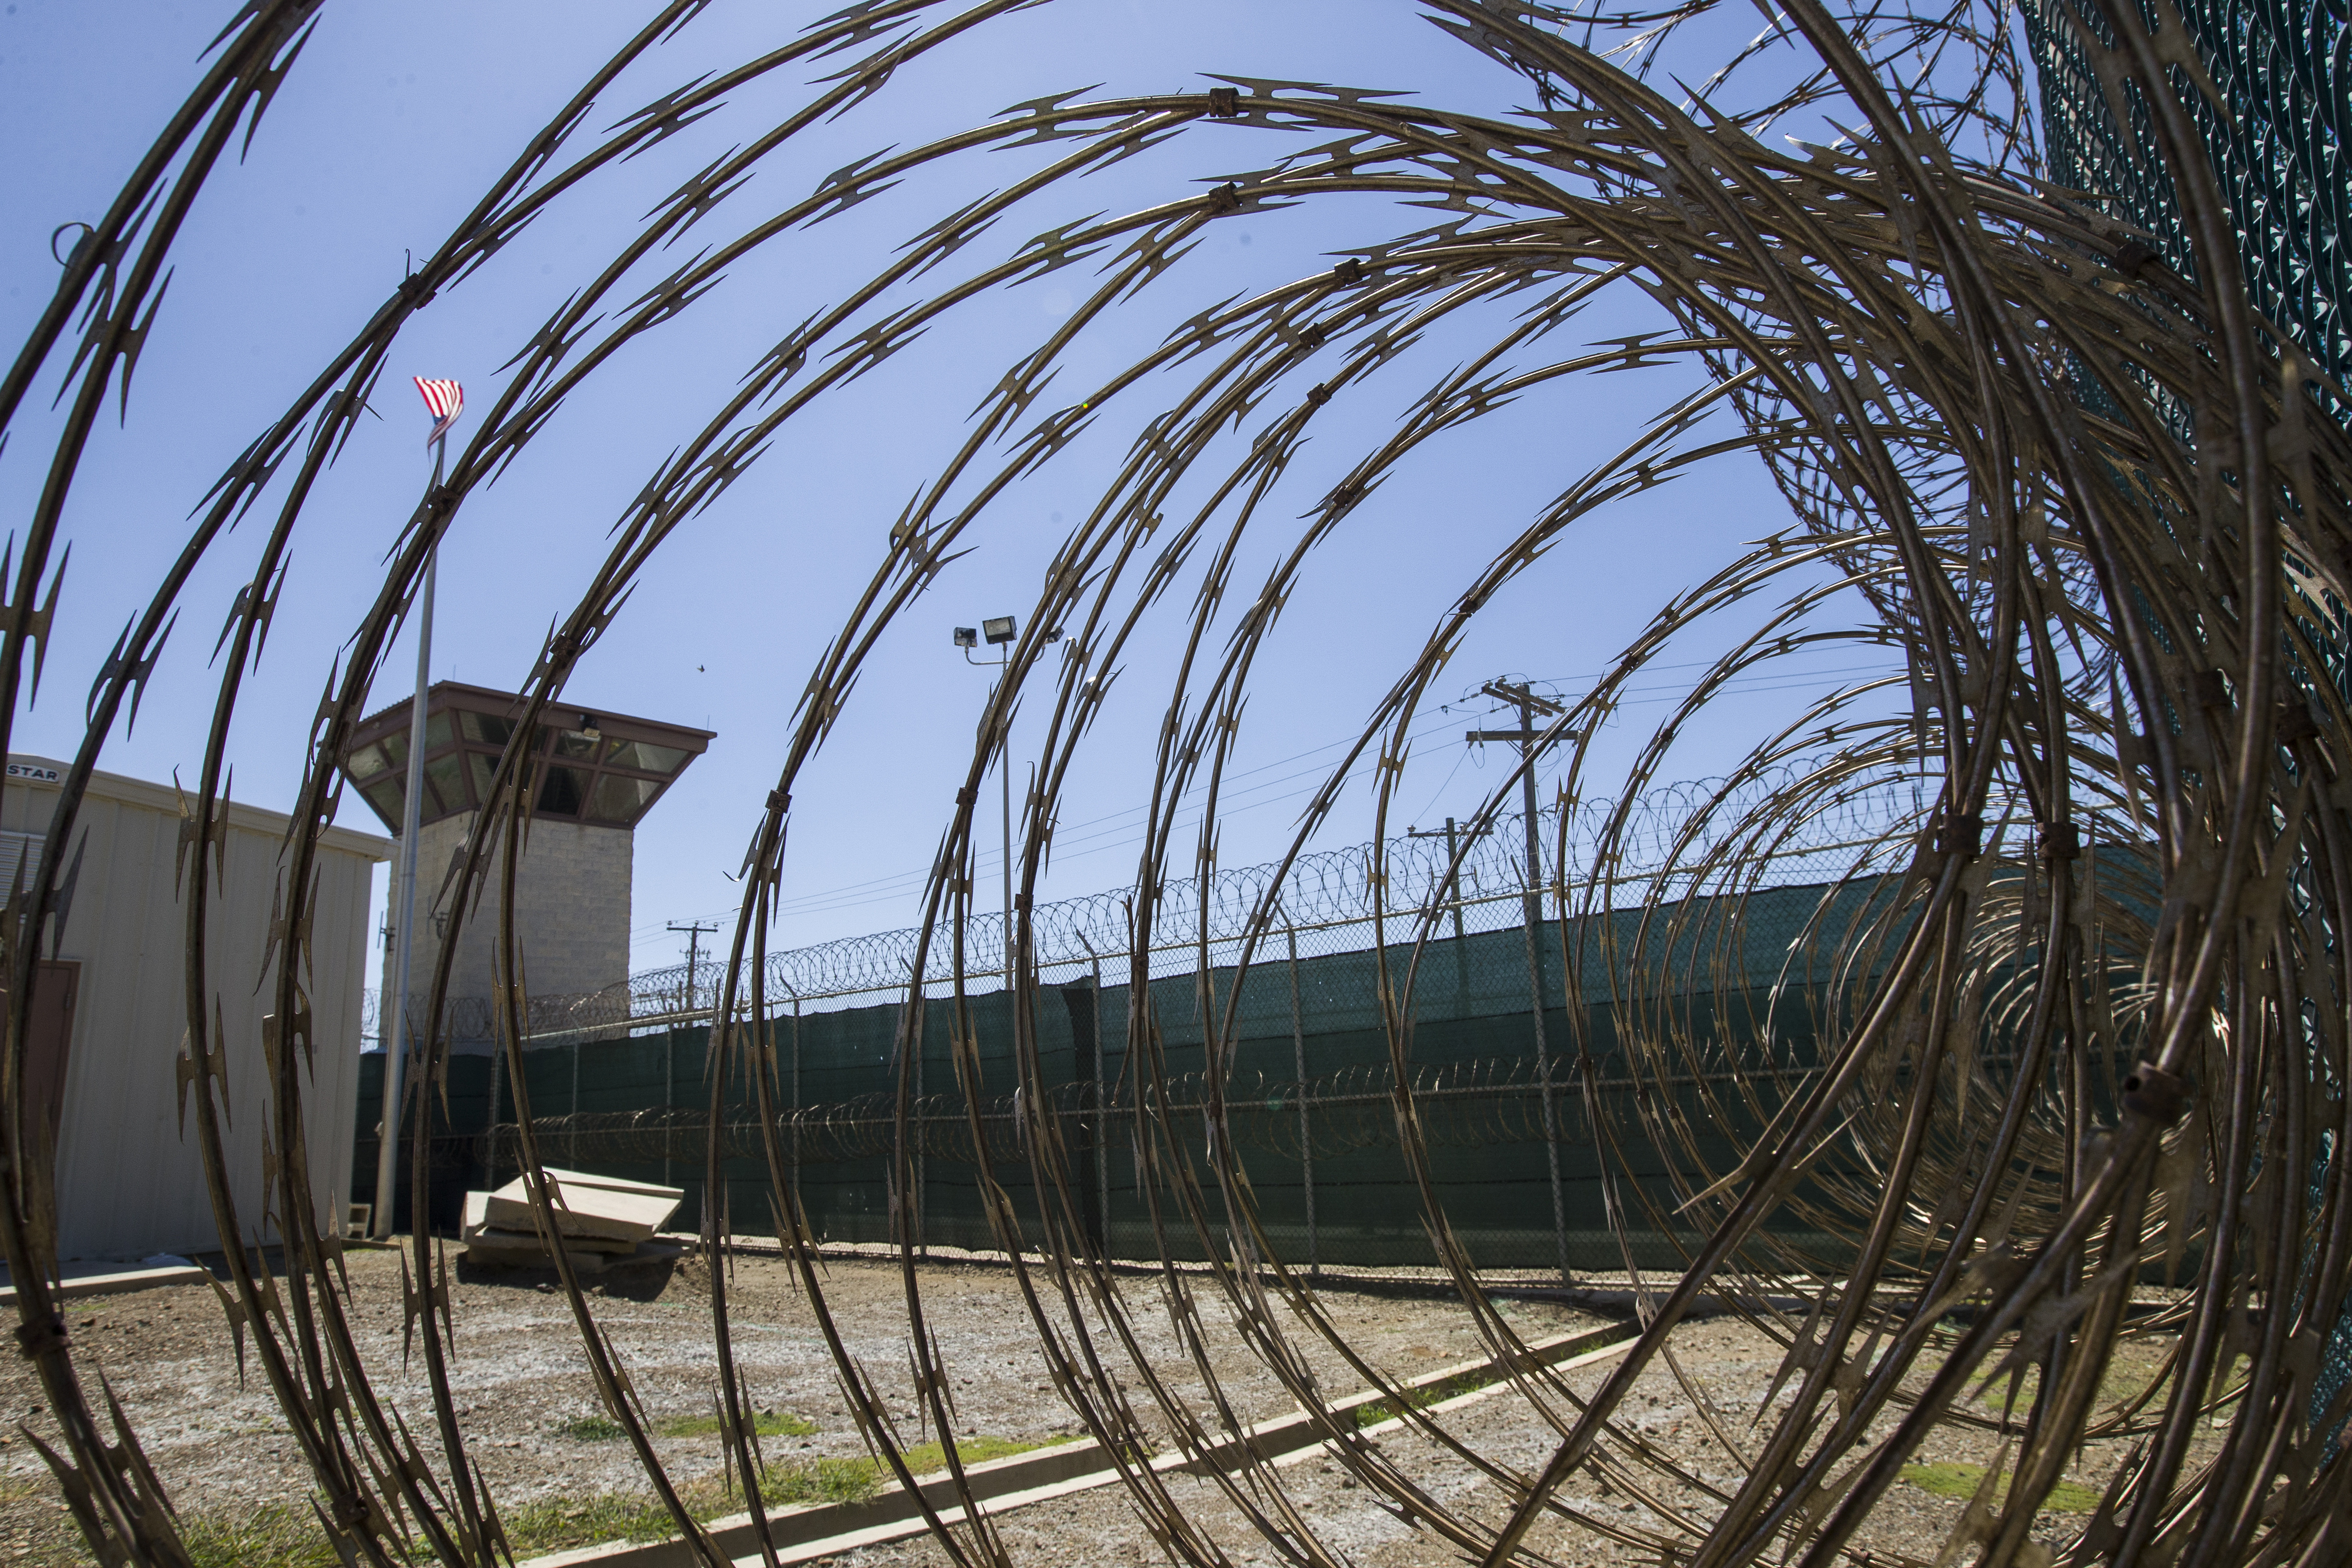 Guantánamo Bay files: Casio wristwatch 'the sign of al-Qaida', The  Guantánamo files